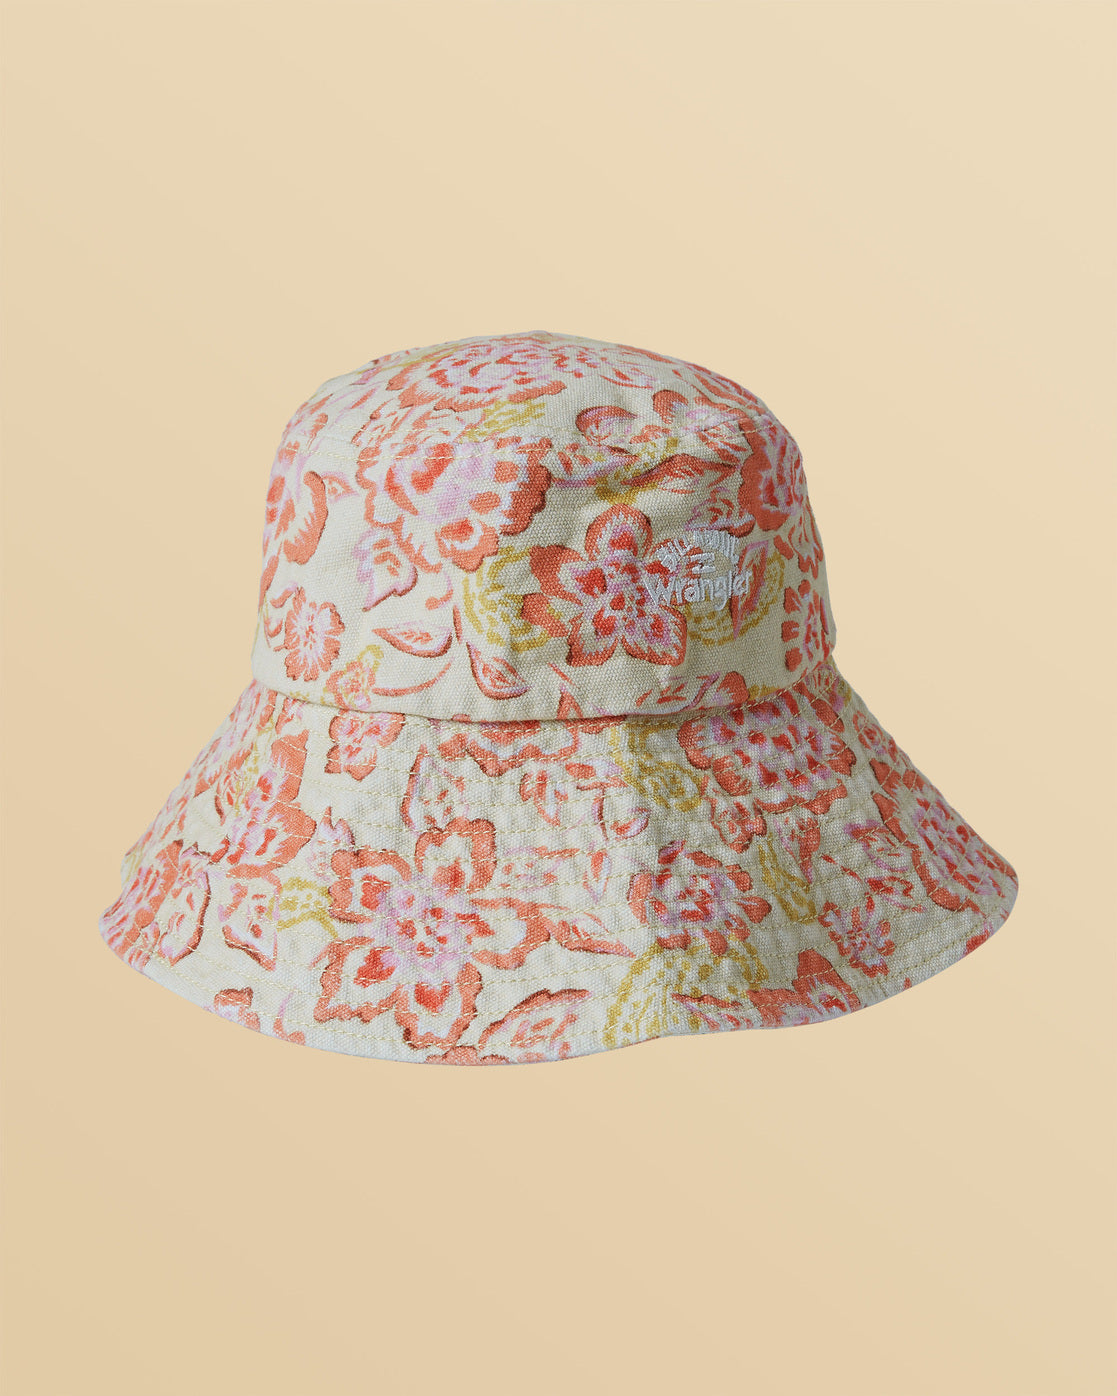 Billabong X Wrangler Sunny Daze Bucket Hat